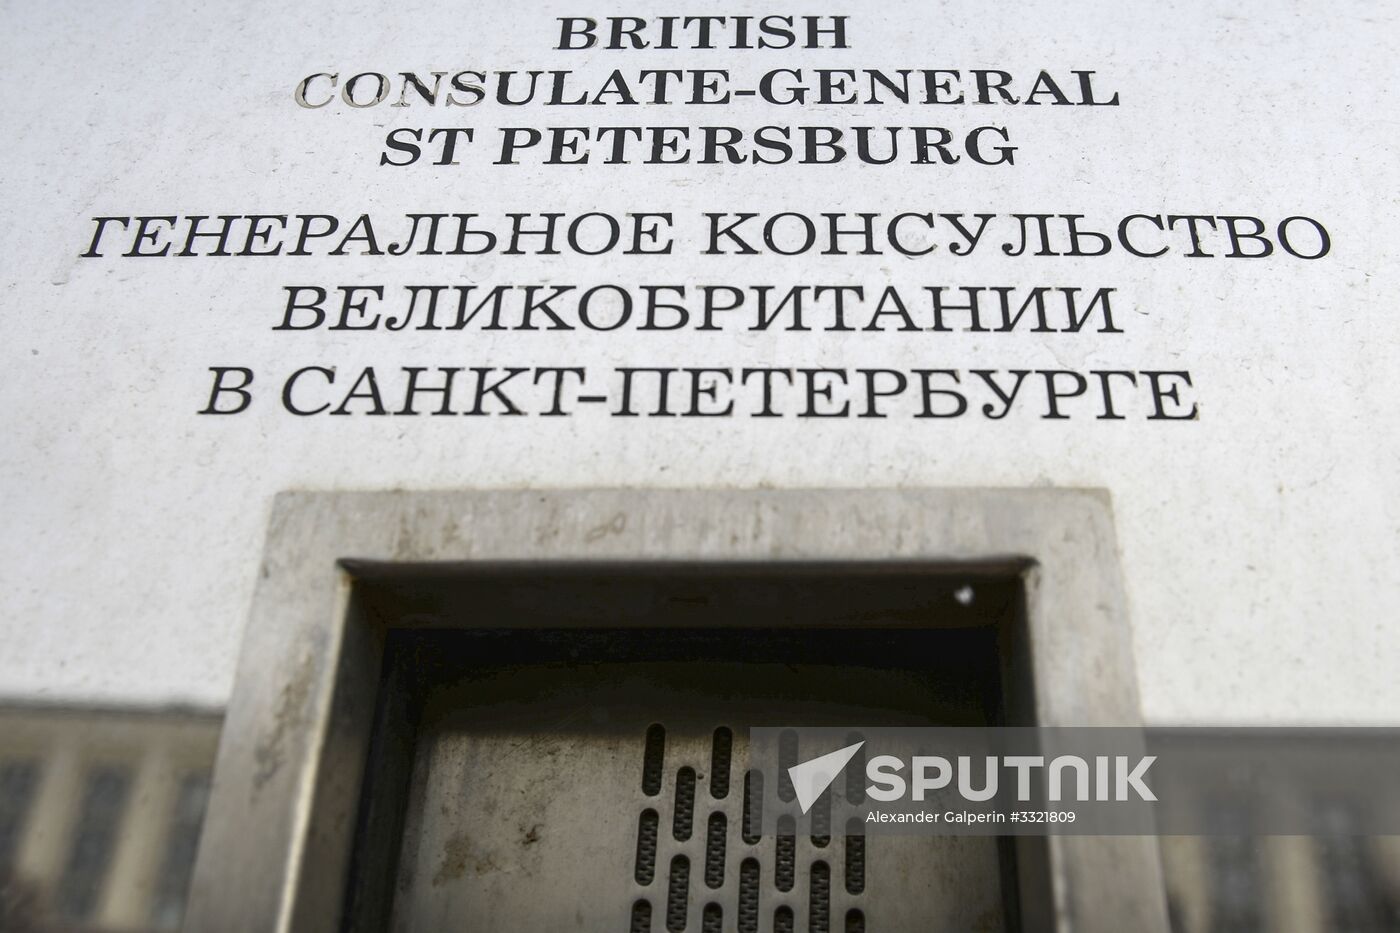 British Consulate-General in St Petersburg